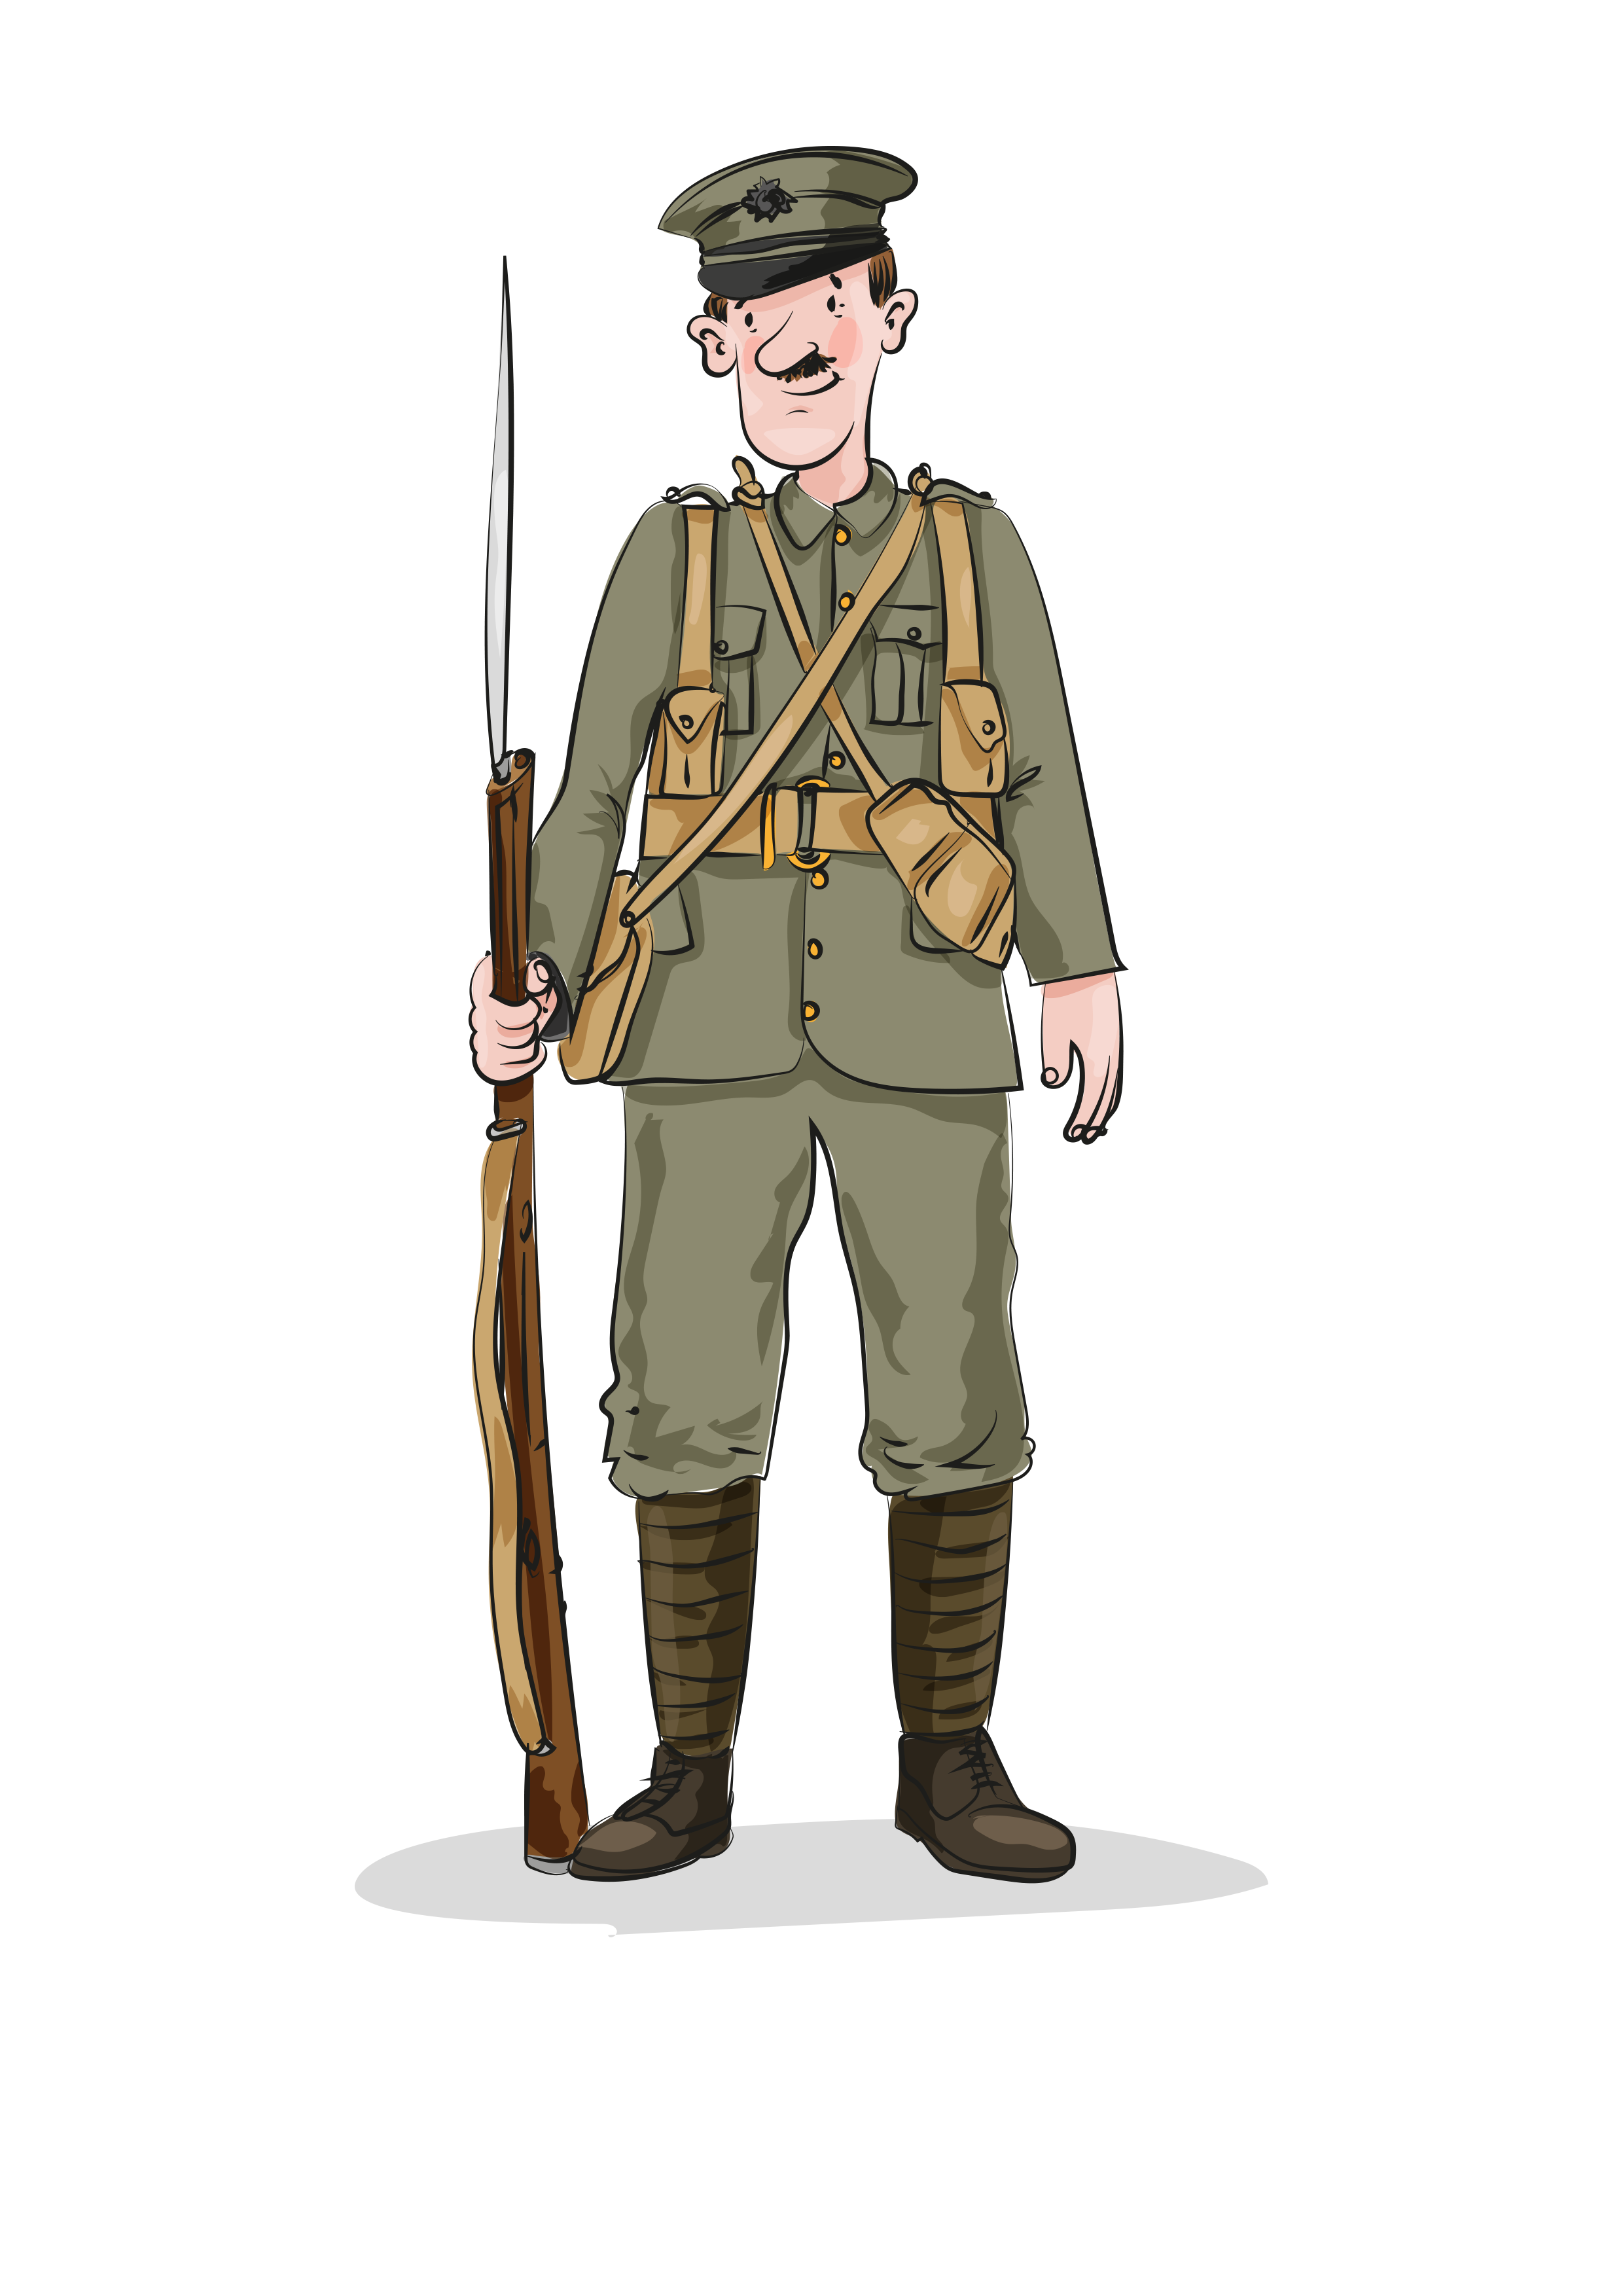 Heritage Illustration - Children's Historic Illustration WWI Soldier